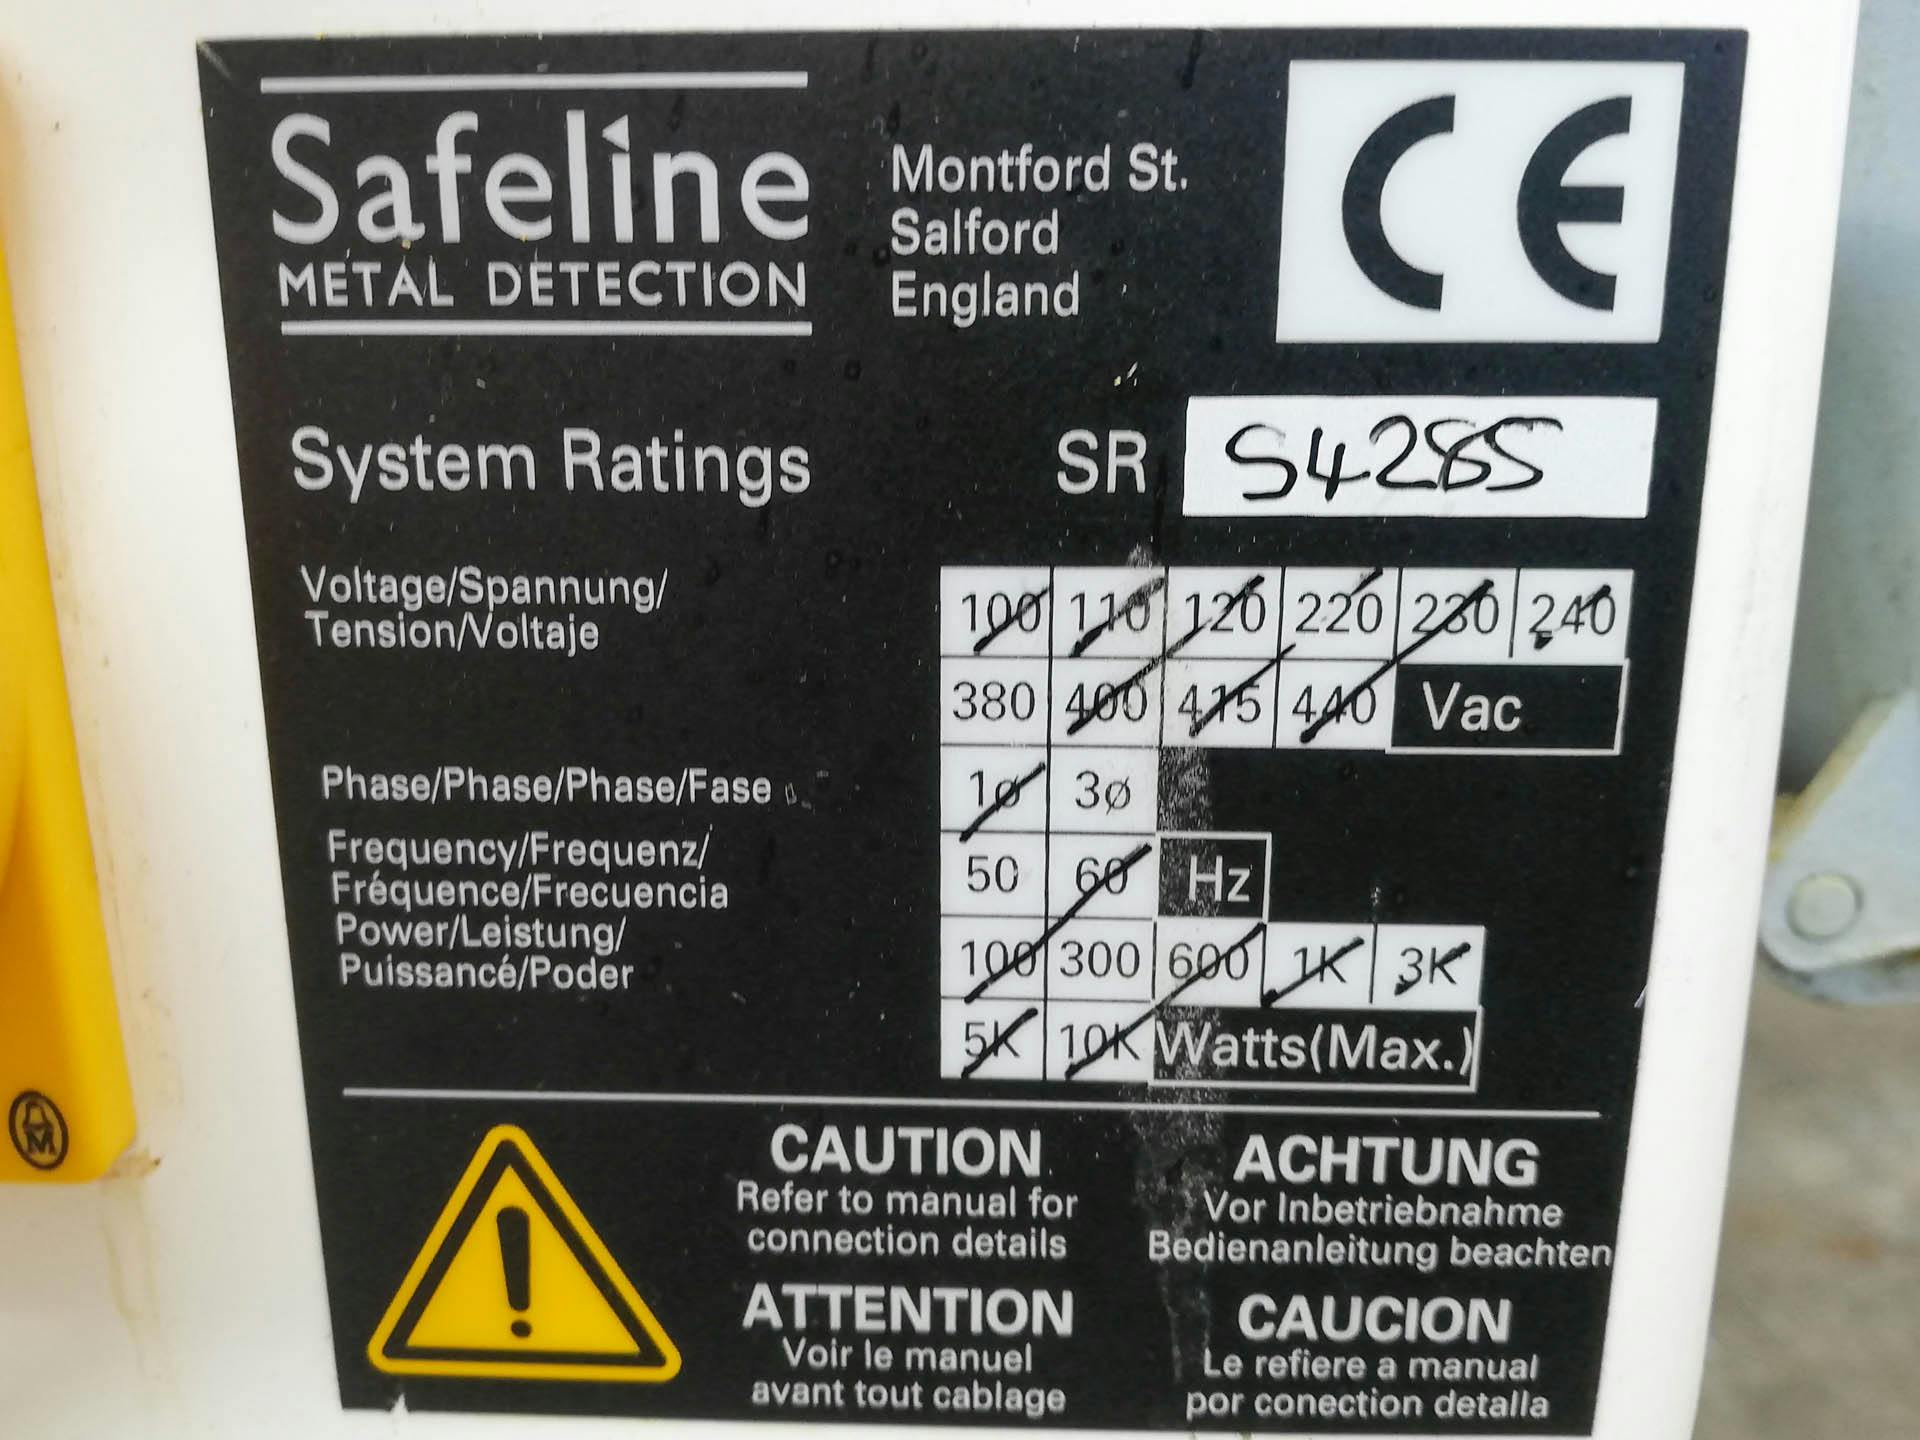 Safeline Uk Signature 2 - Metal detector - image 5